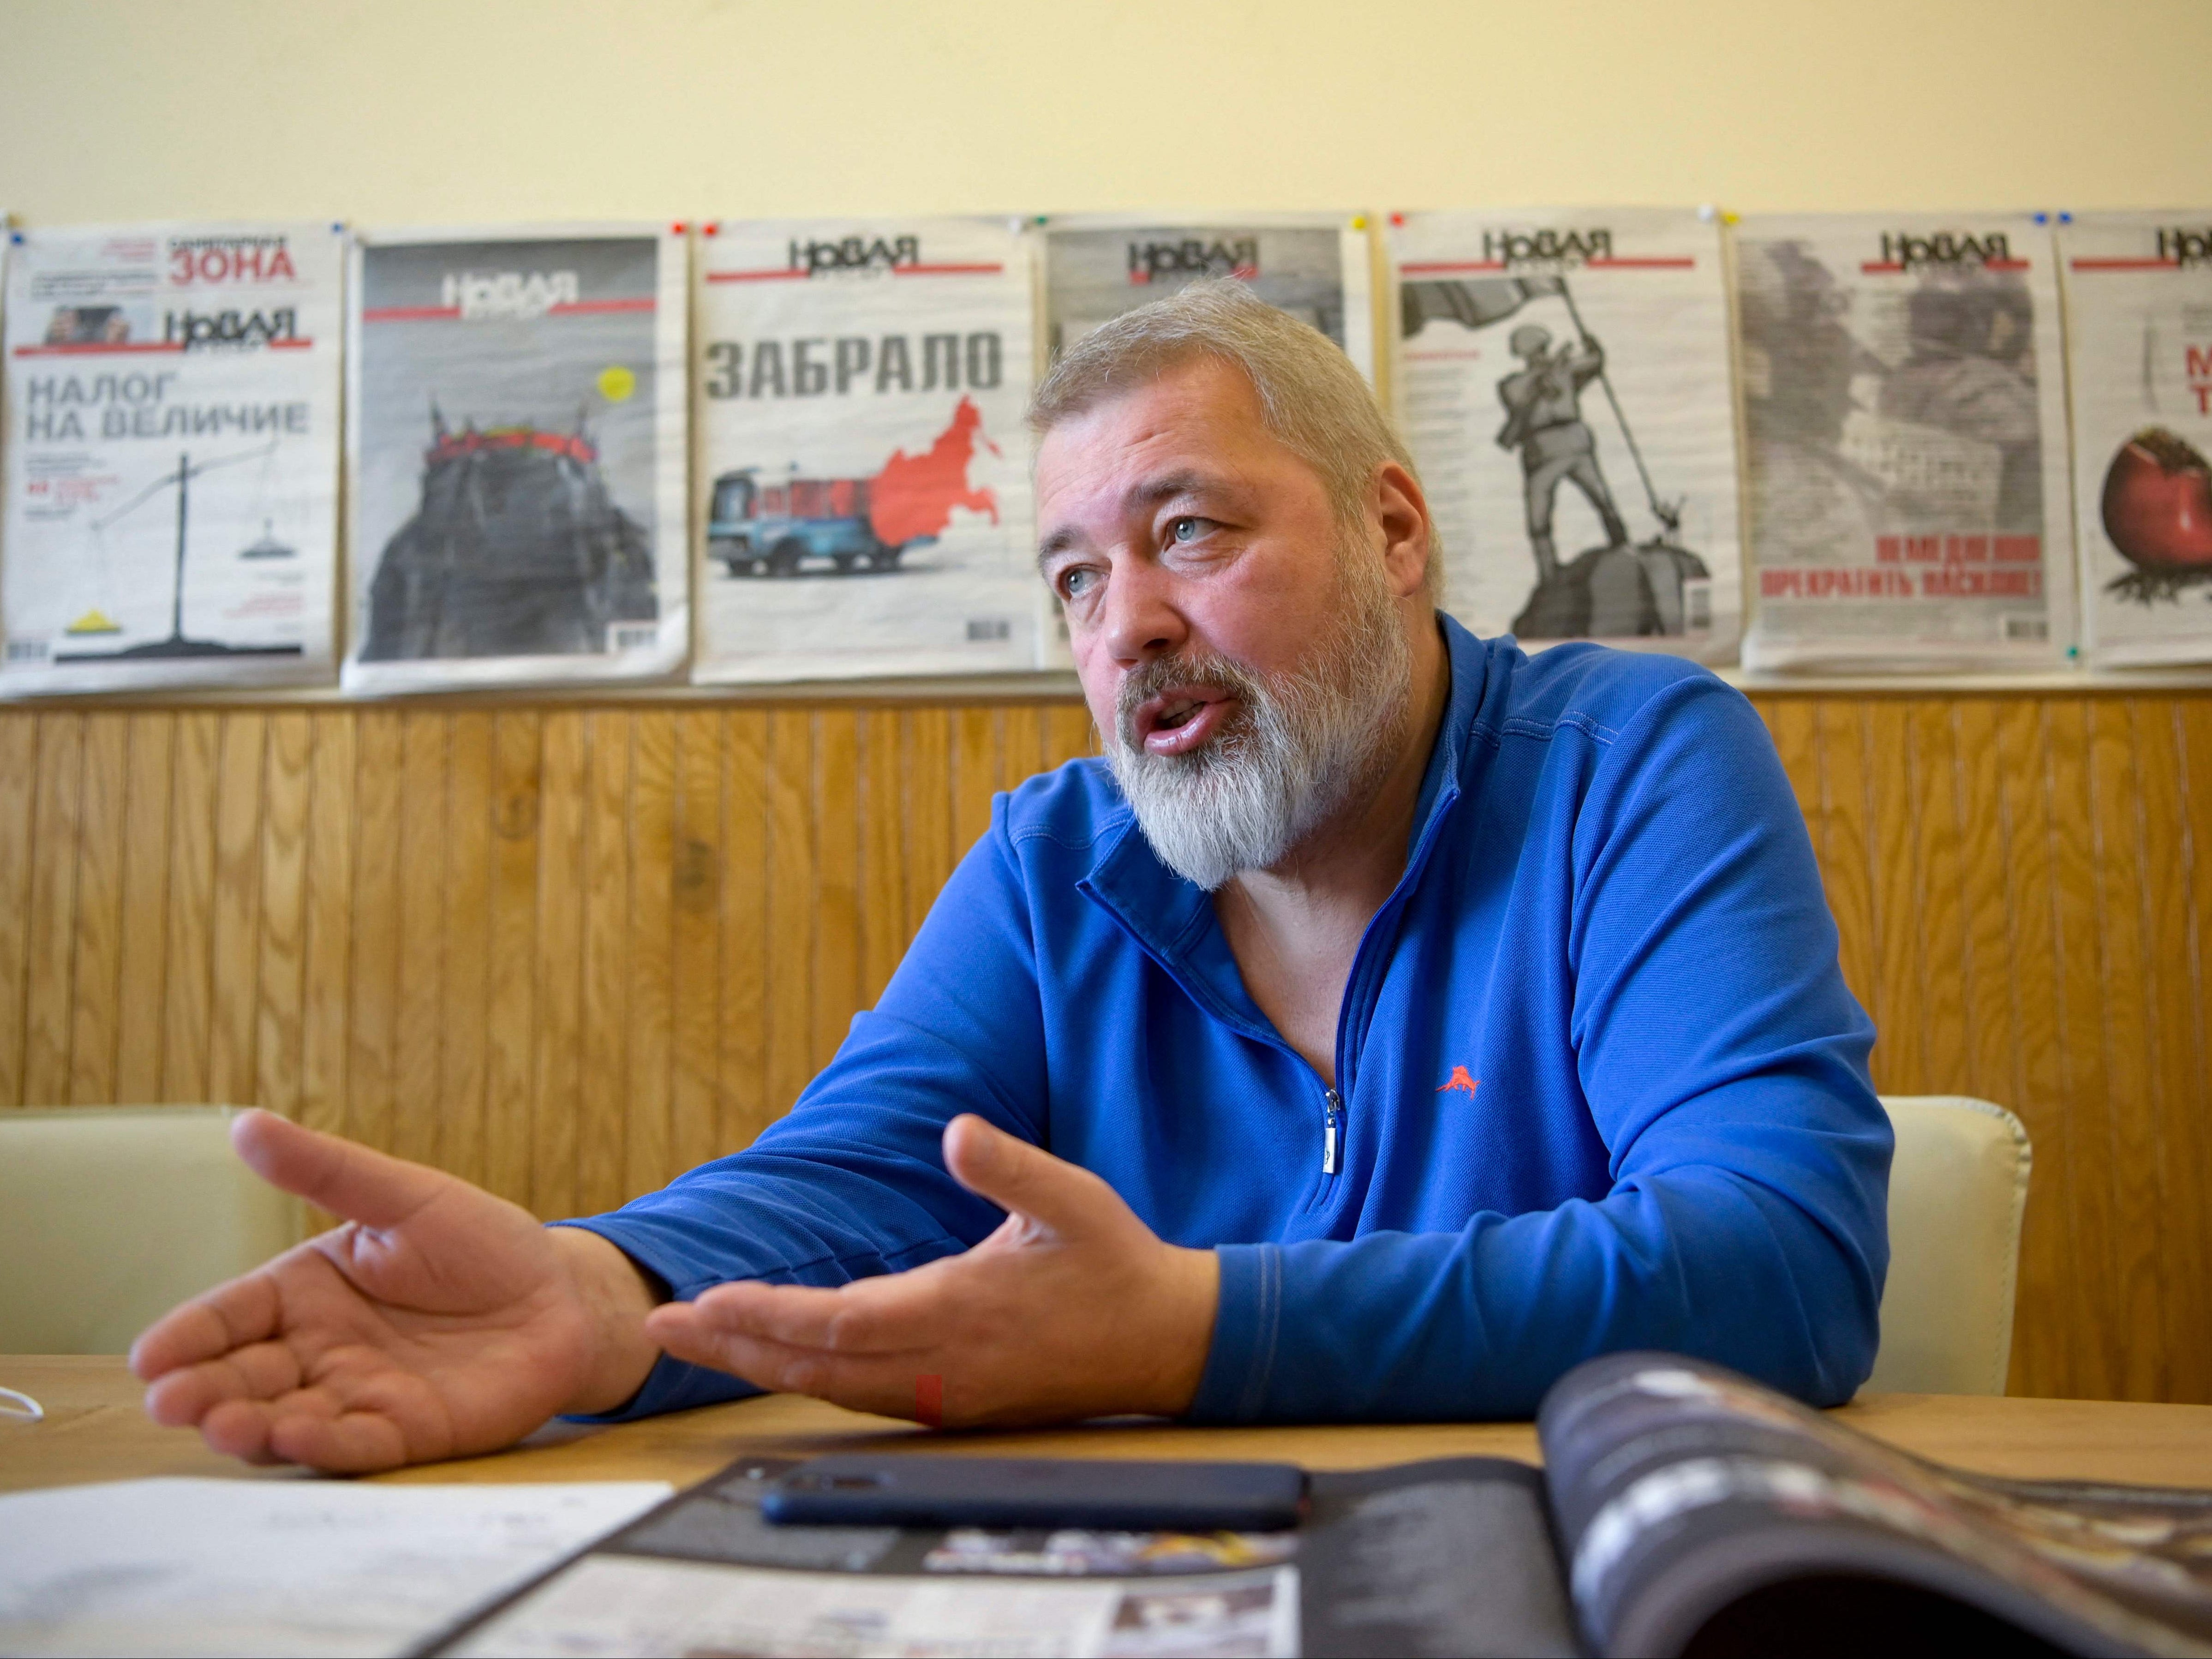 Dmitry Muratov, editor-in-chief of Russian investigative newspaper Novaya Gazeta